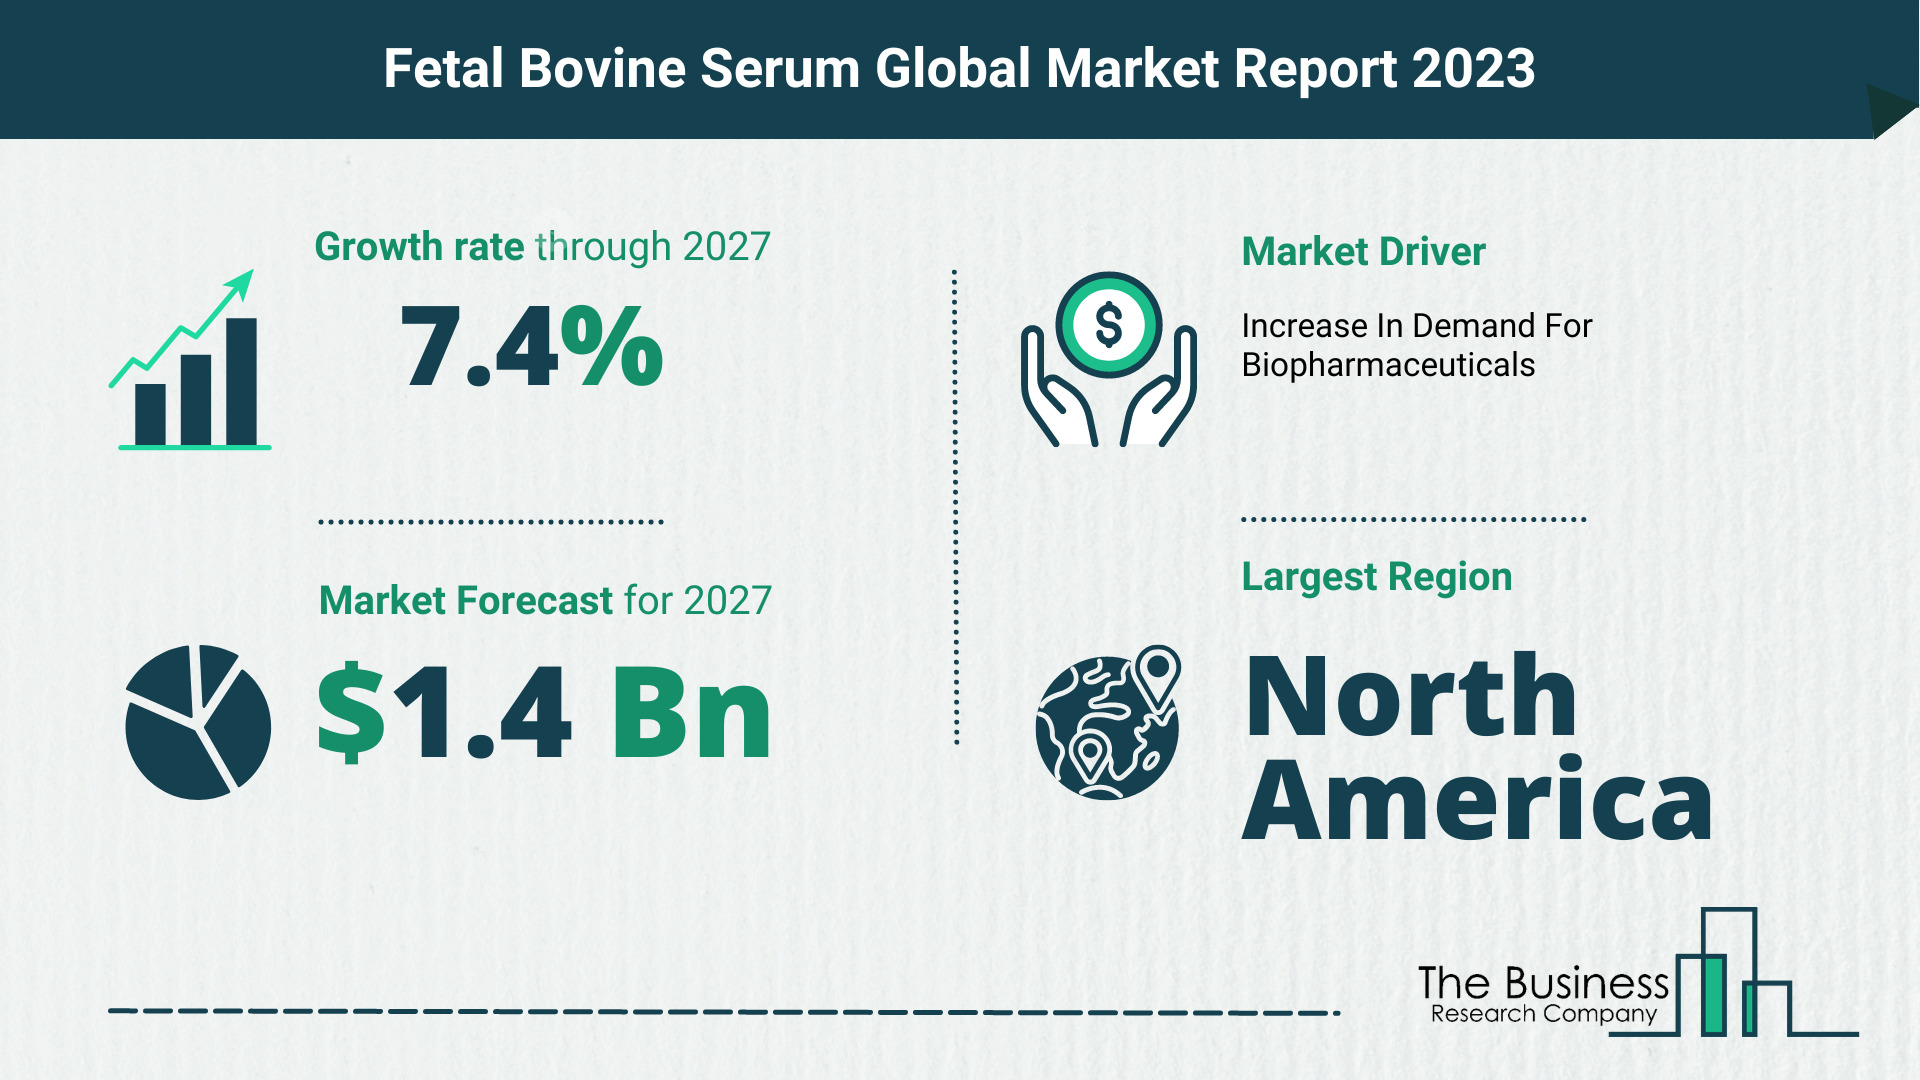 Global Fetal Bovine Serum Market Size